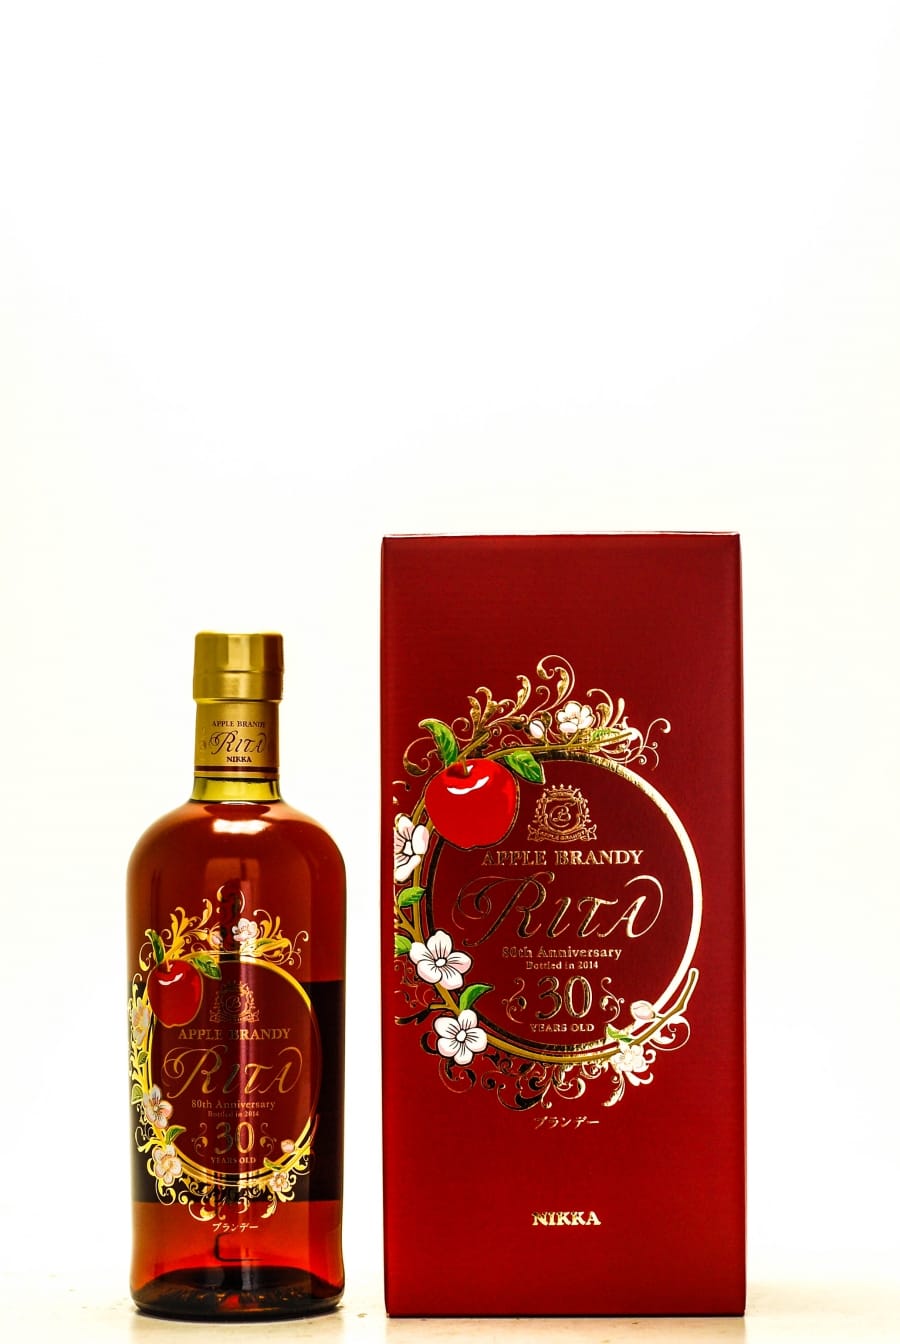 Nikka - Nikka Rita Apple Brandy 30 Years Old 80th year of Nikka distillery celebration 43% NV Perfect